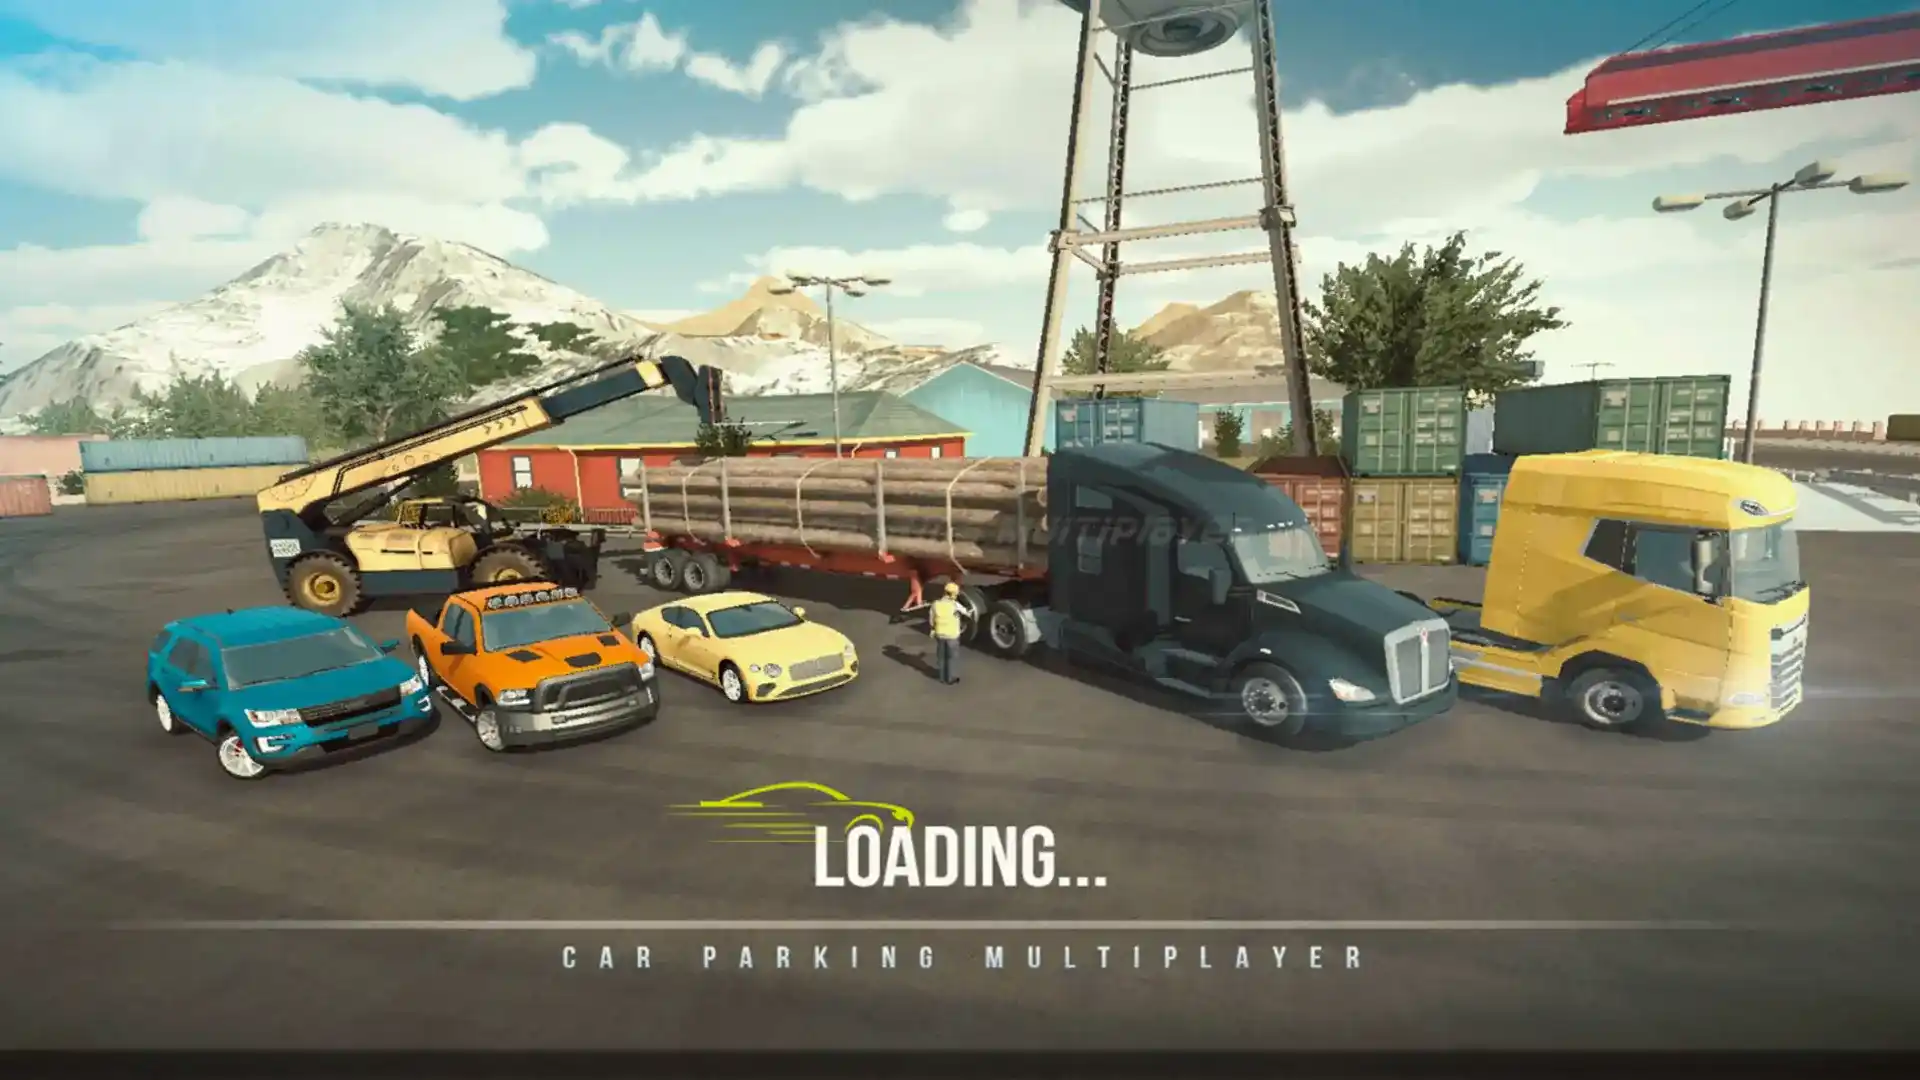 Car Parking Multiplayer gameplay